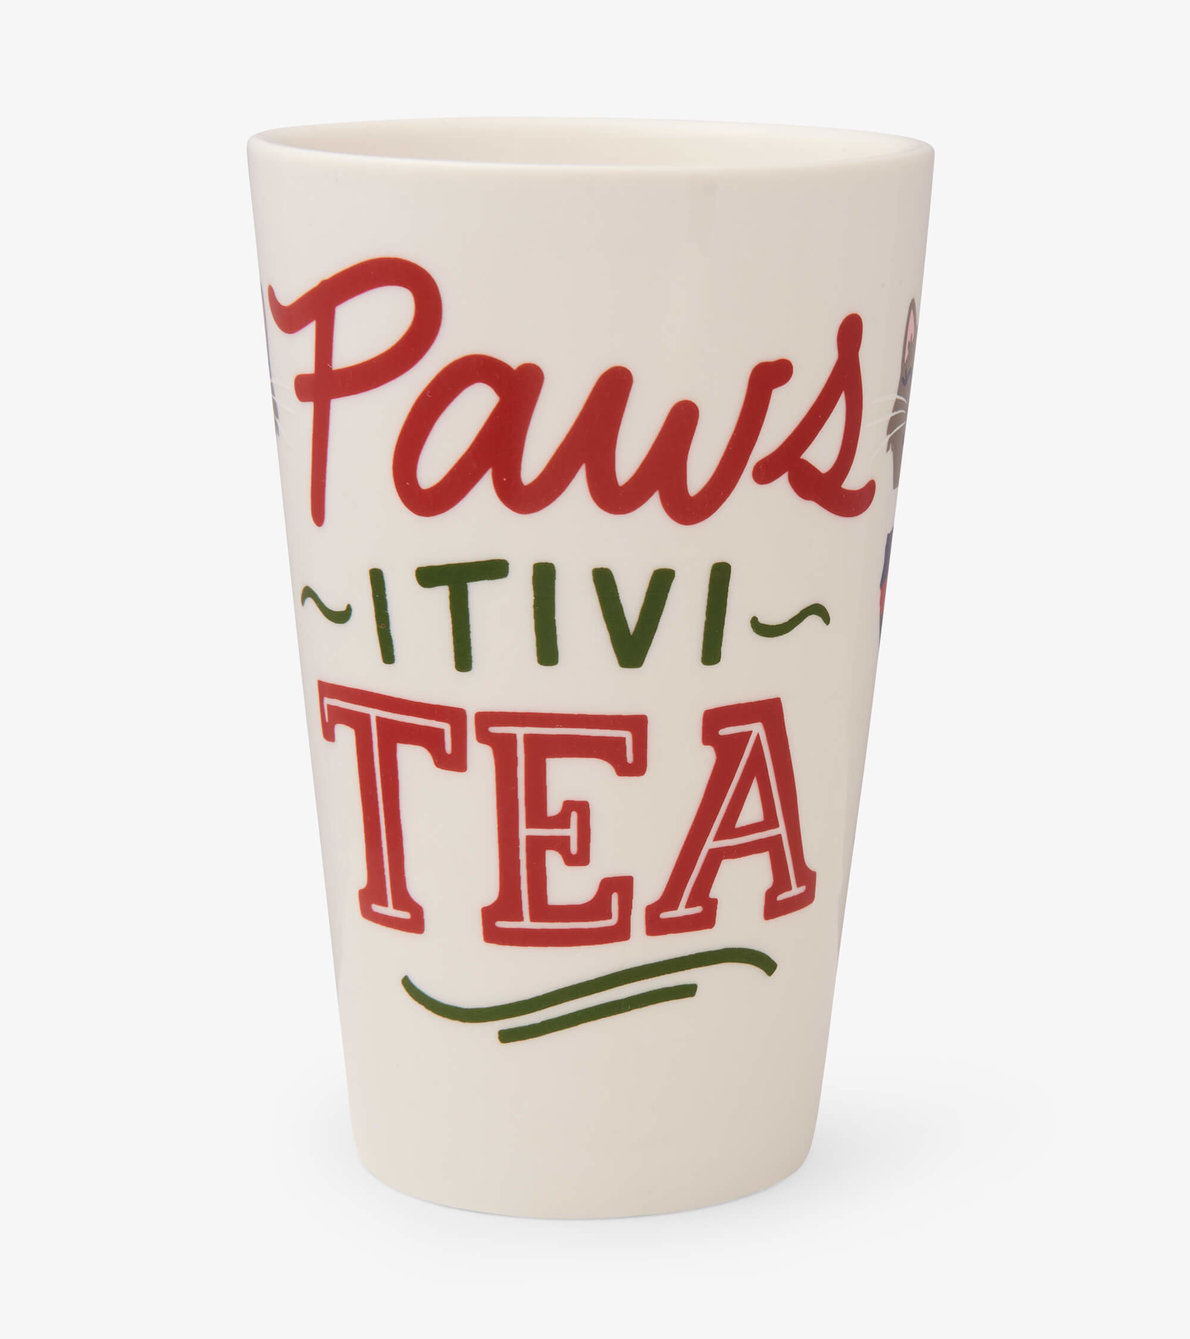 View larger image of Pawsitivi Tea Large Ceramic Mug